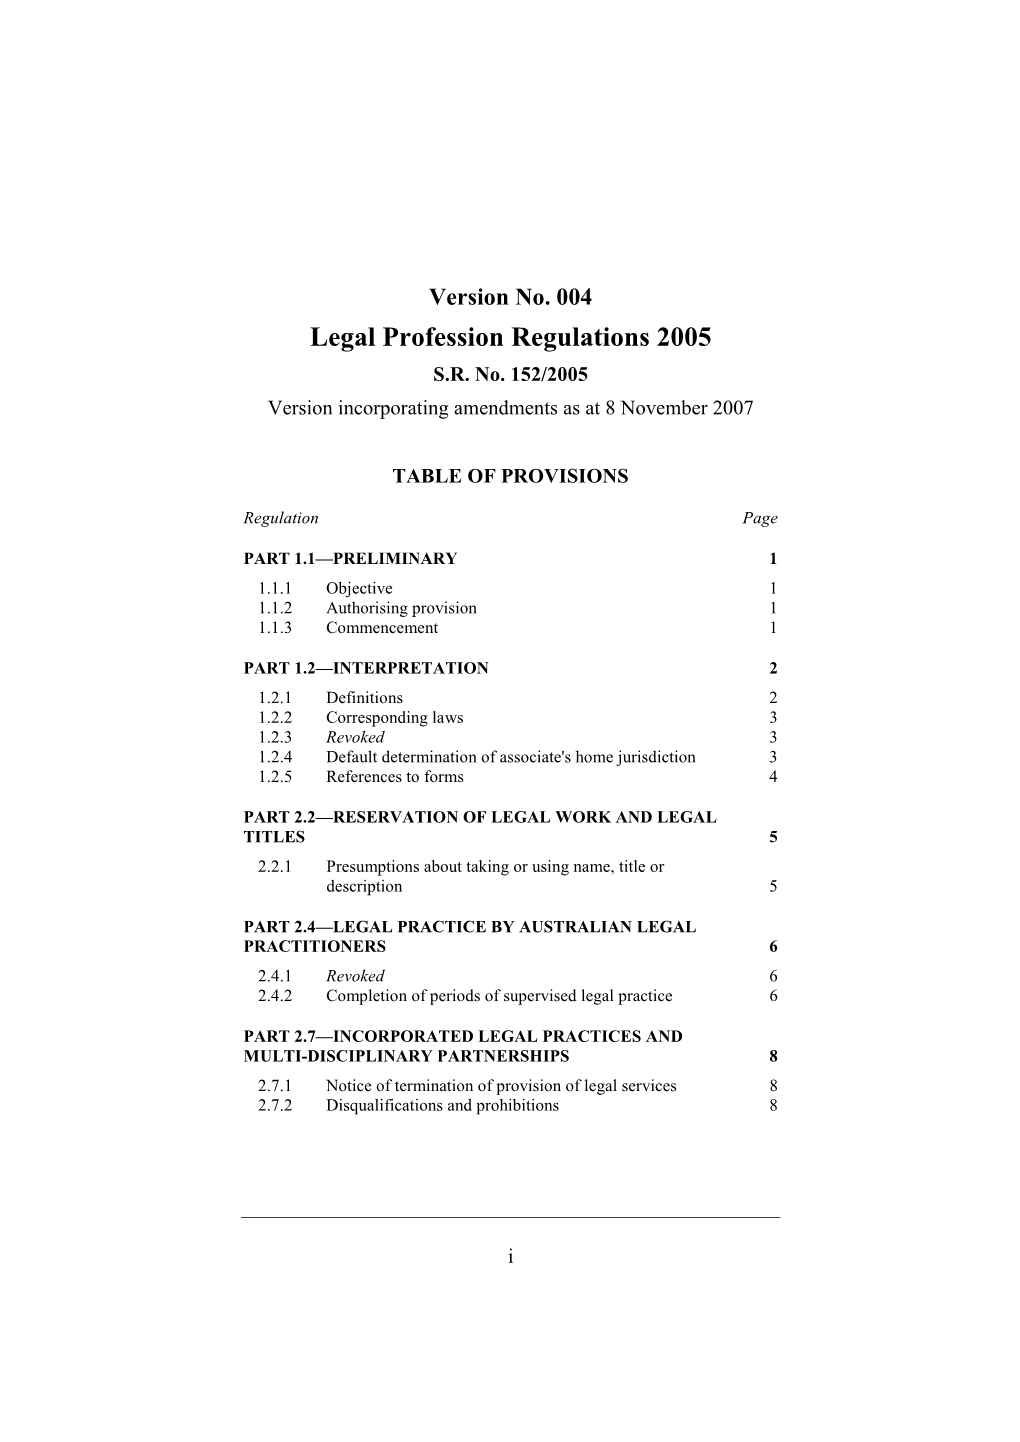 Legal Profession Regulations 2005 S.R